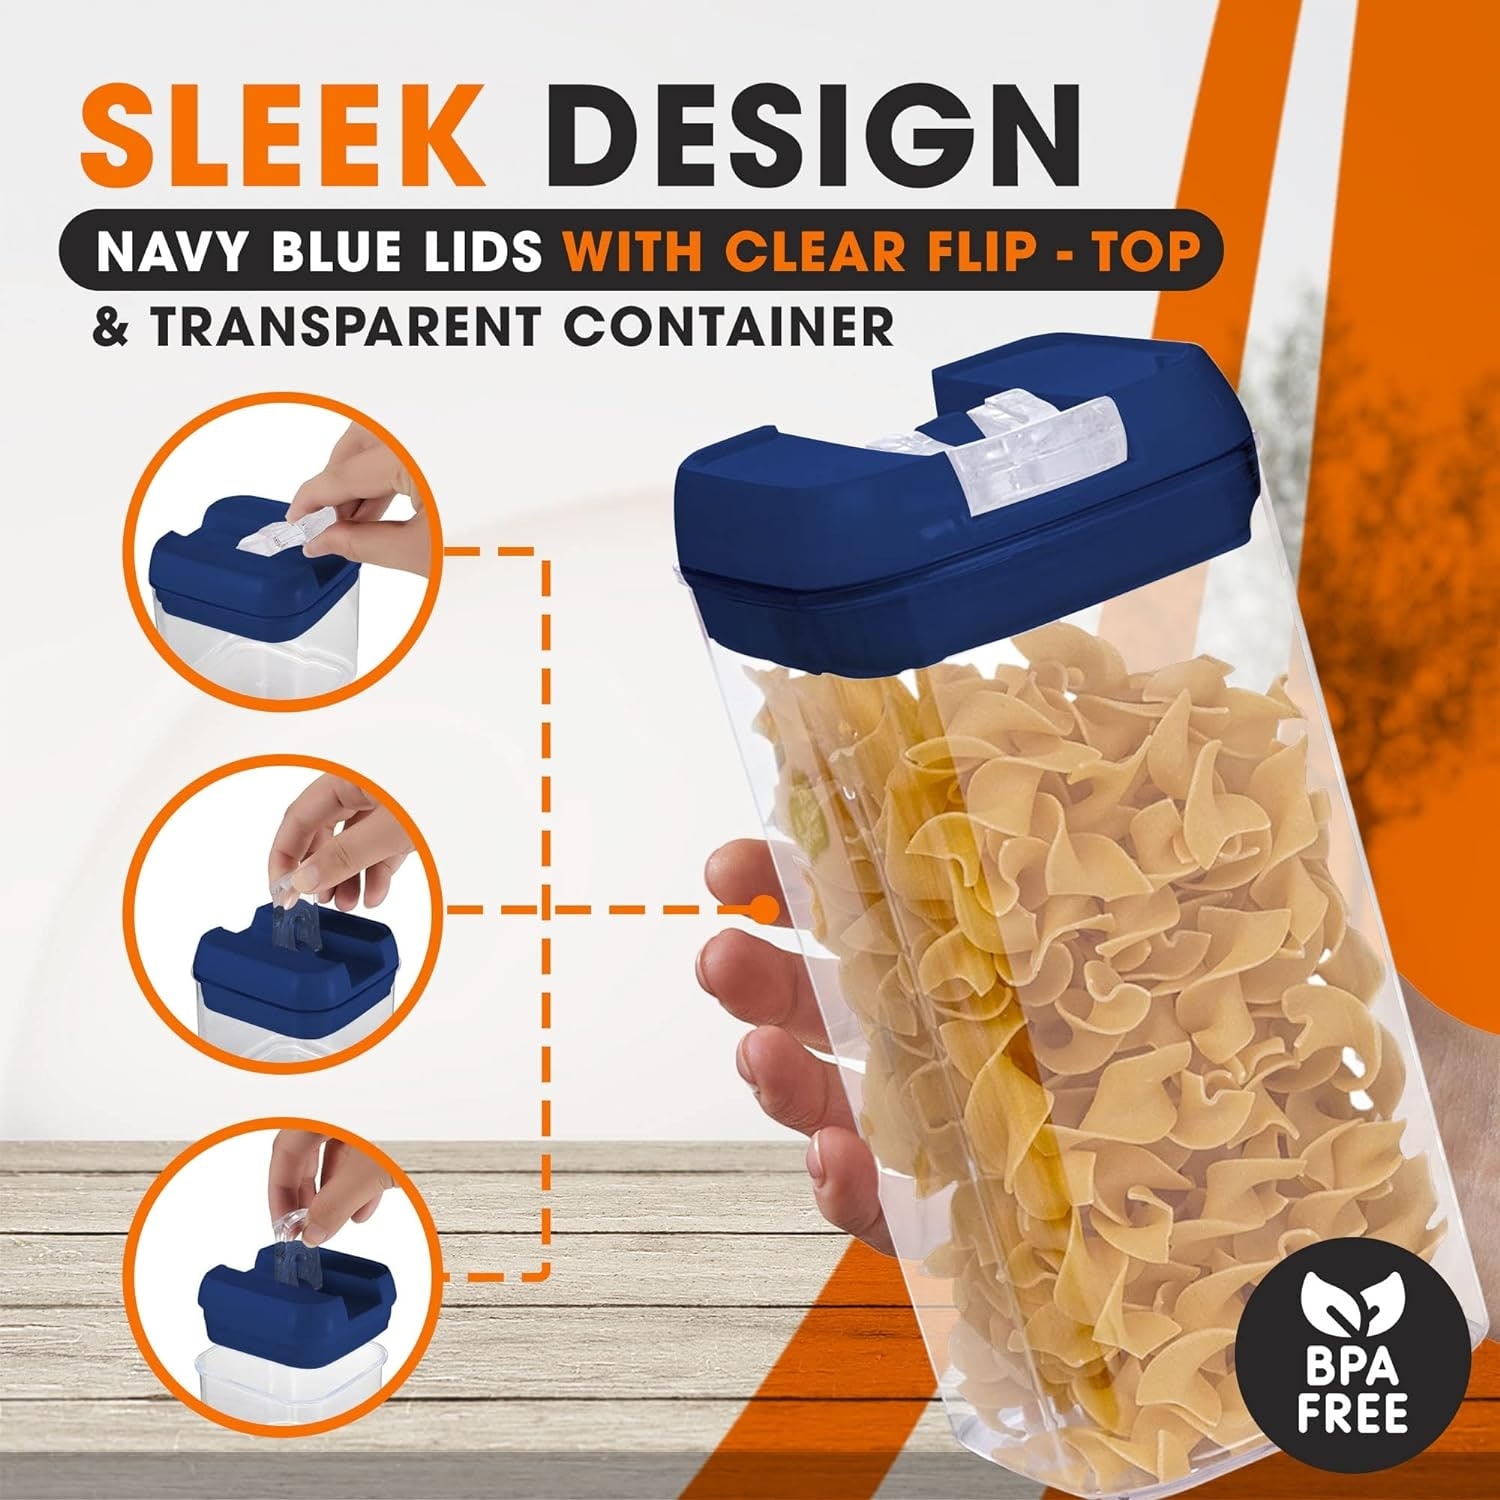 Clear Glass Food Storage 30 Piece Set with Navy Lids BPA-free